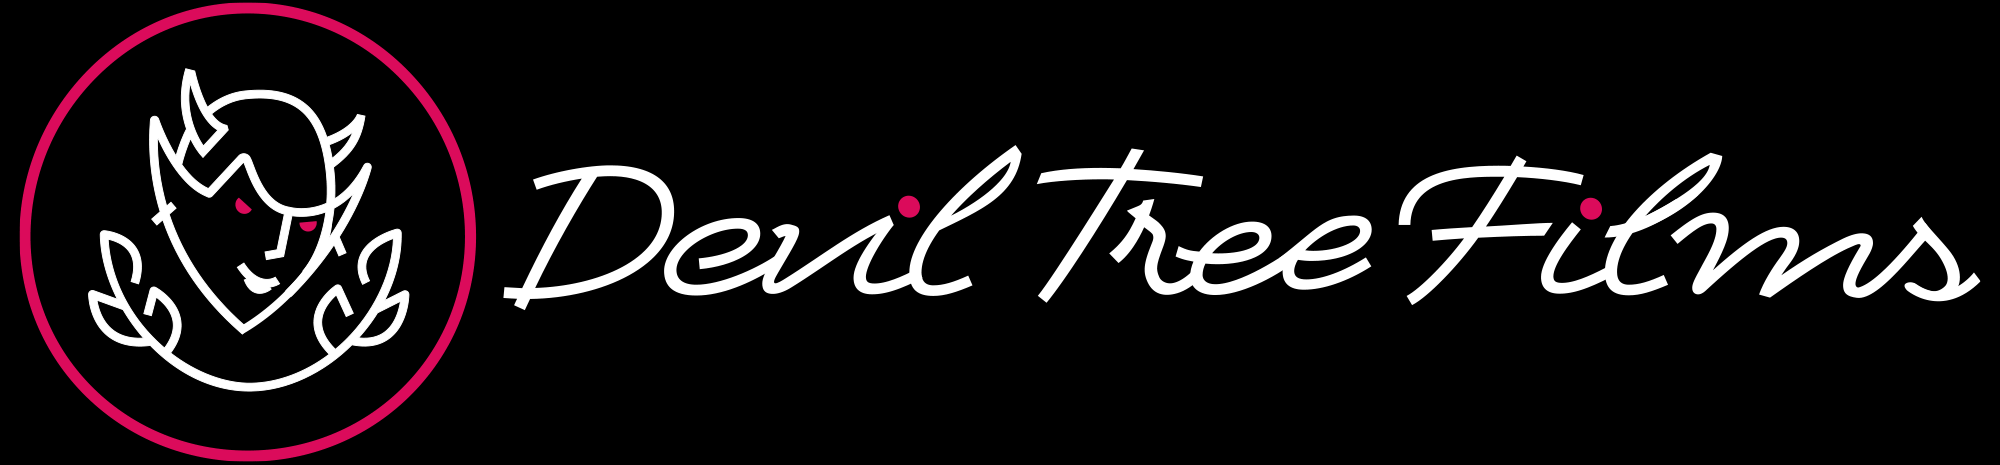 The horizontal version Devil Tree Films logo